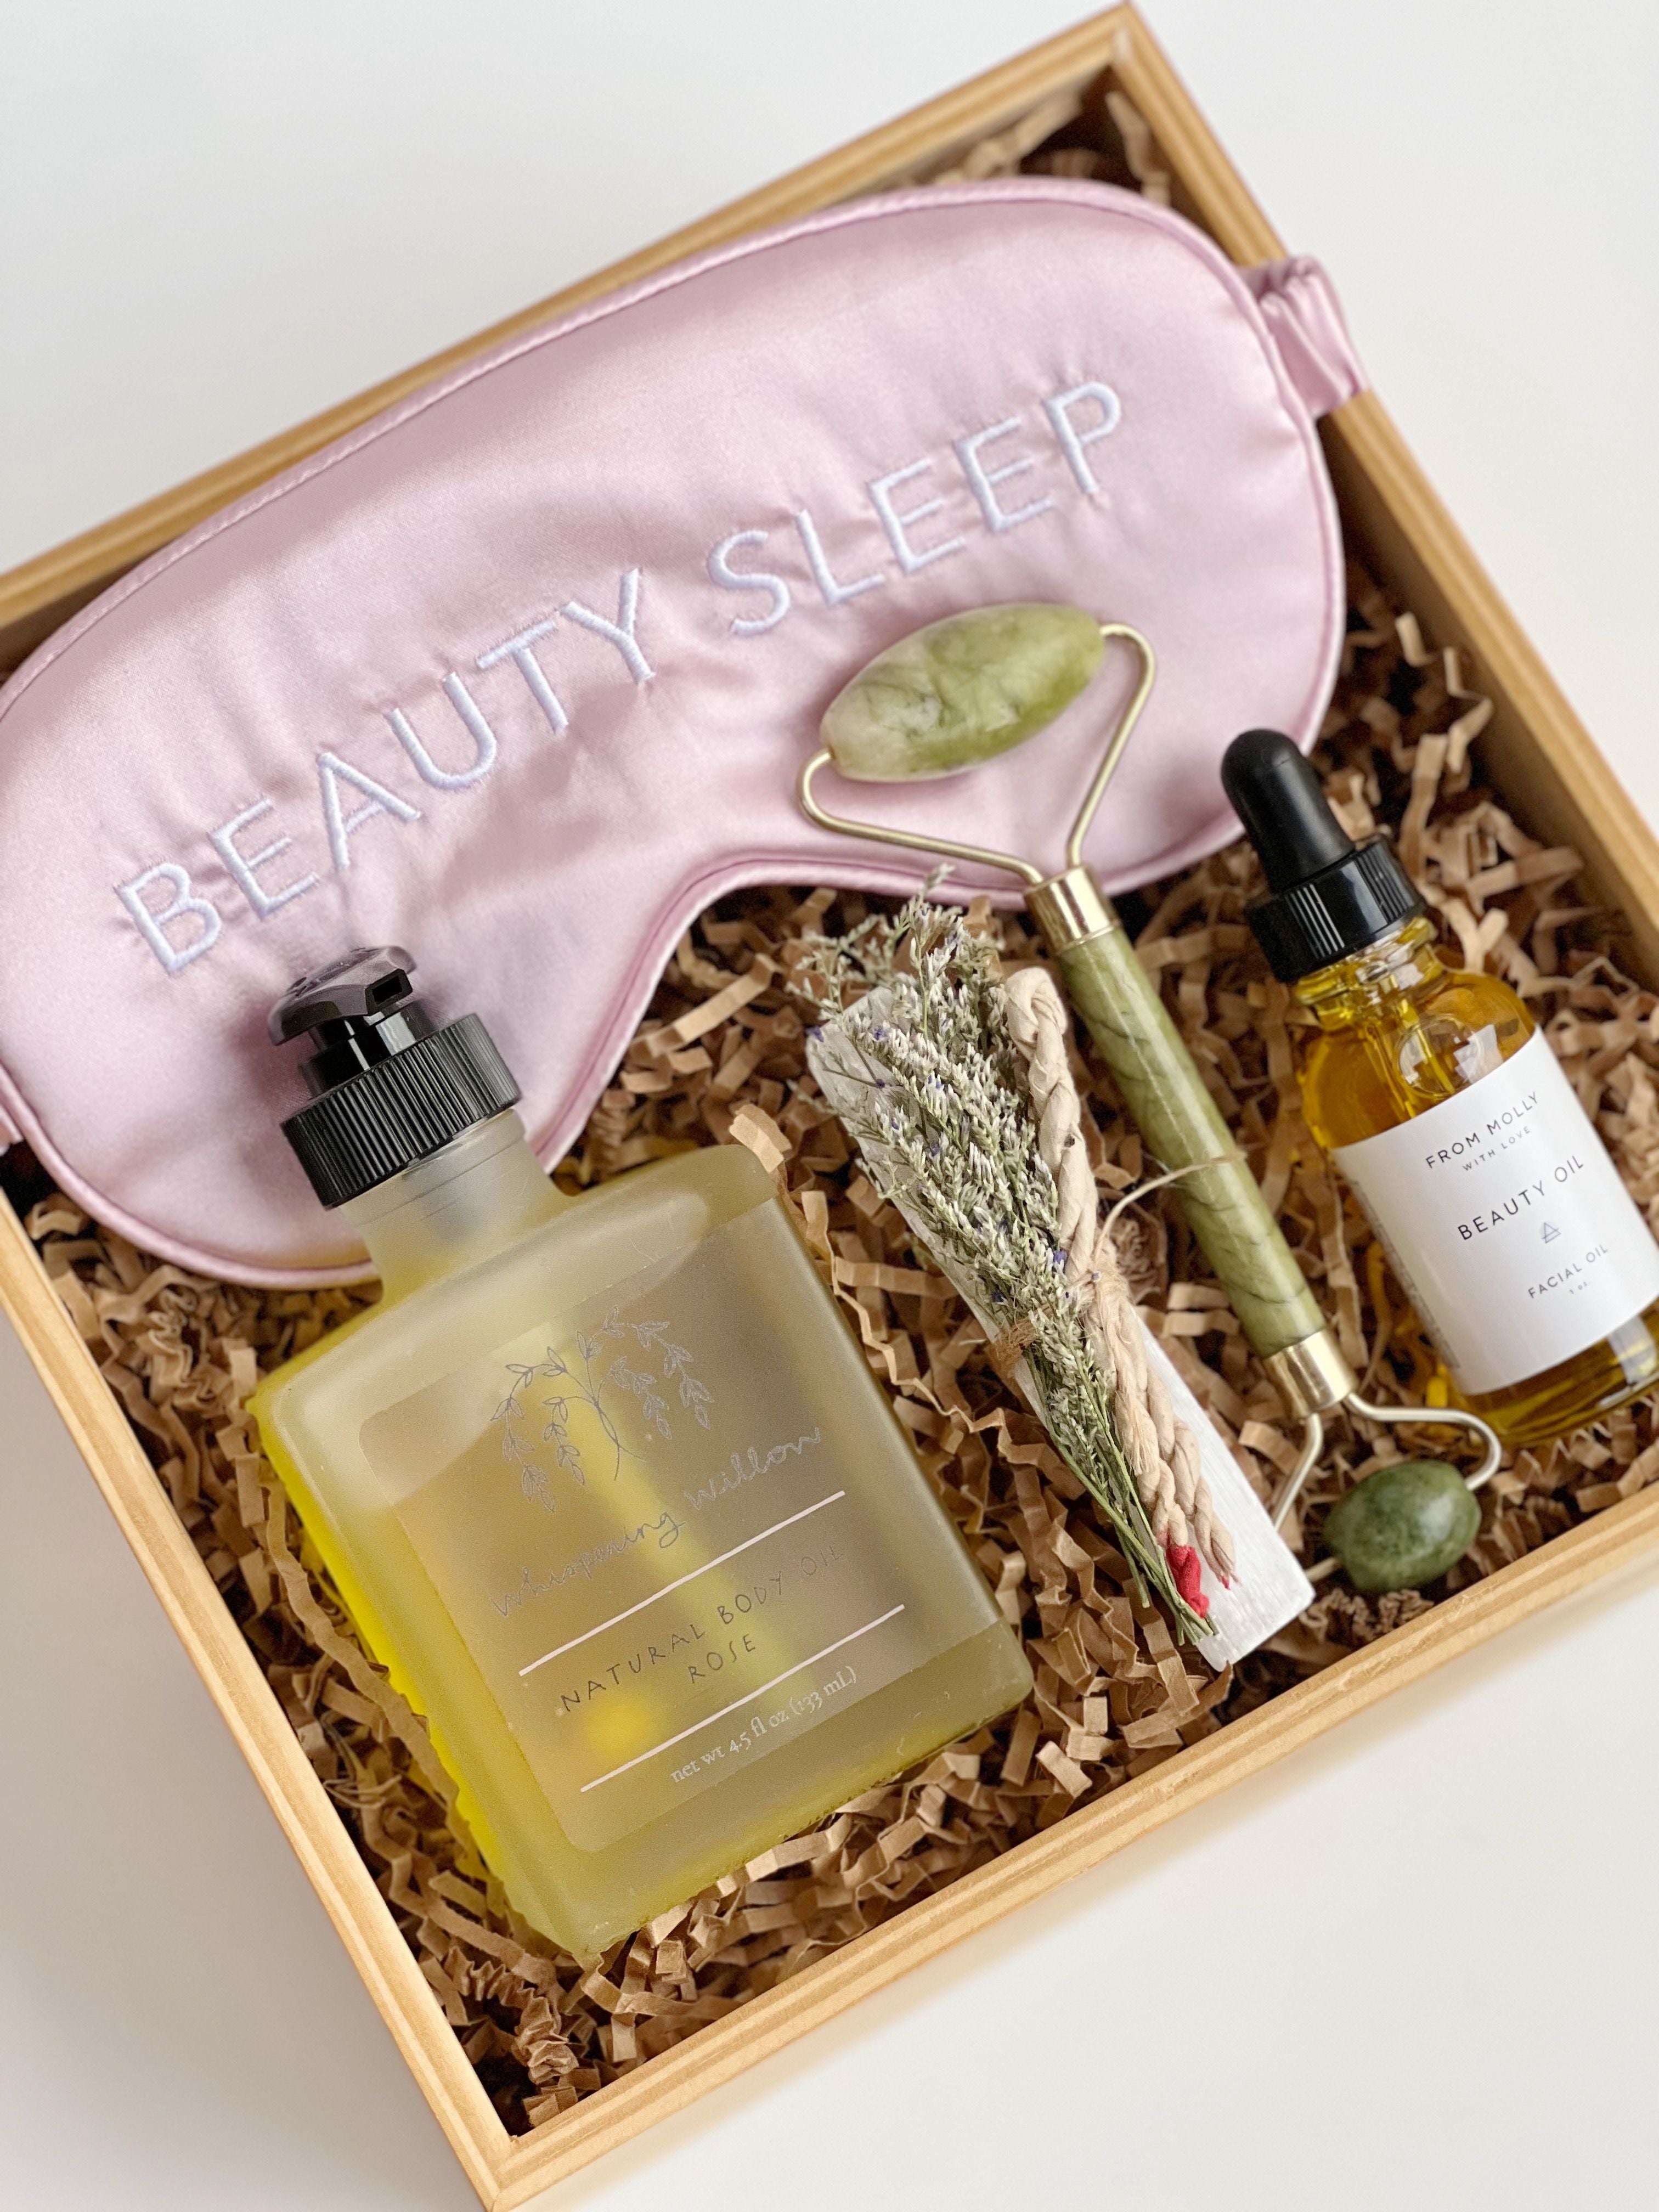 The Beauty Sleep Gift Box